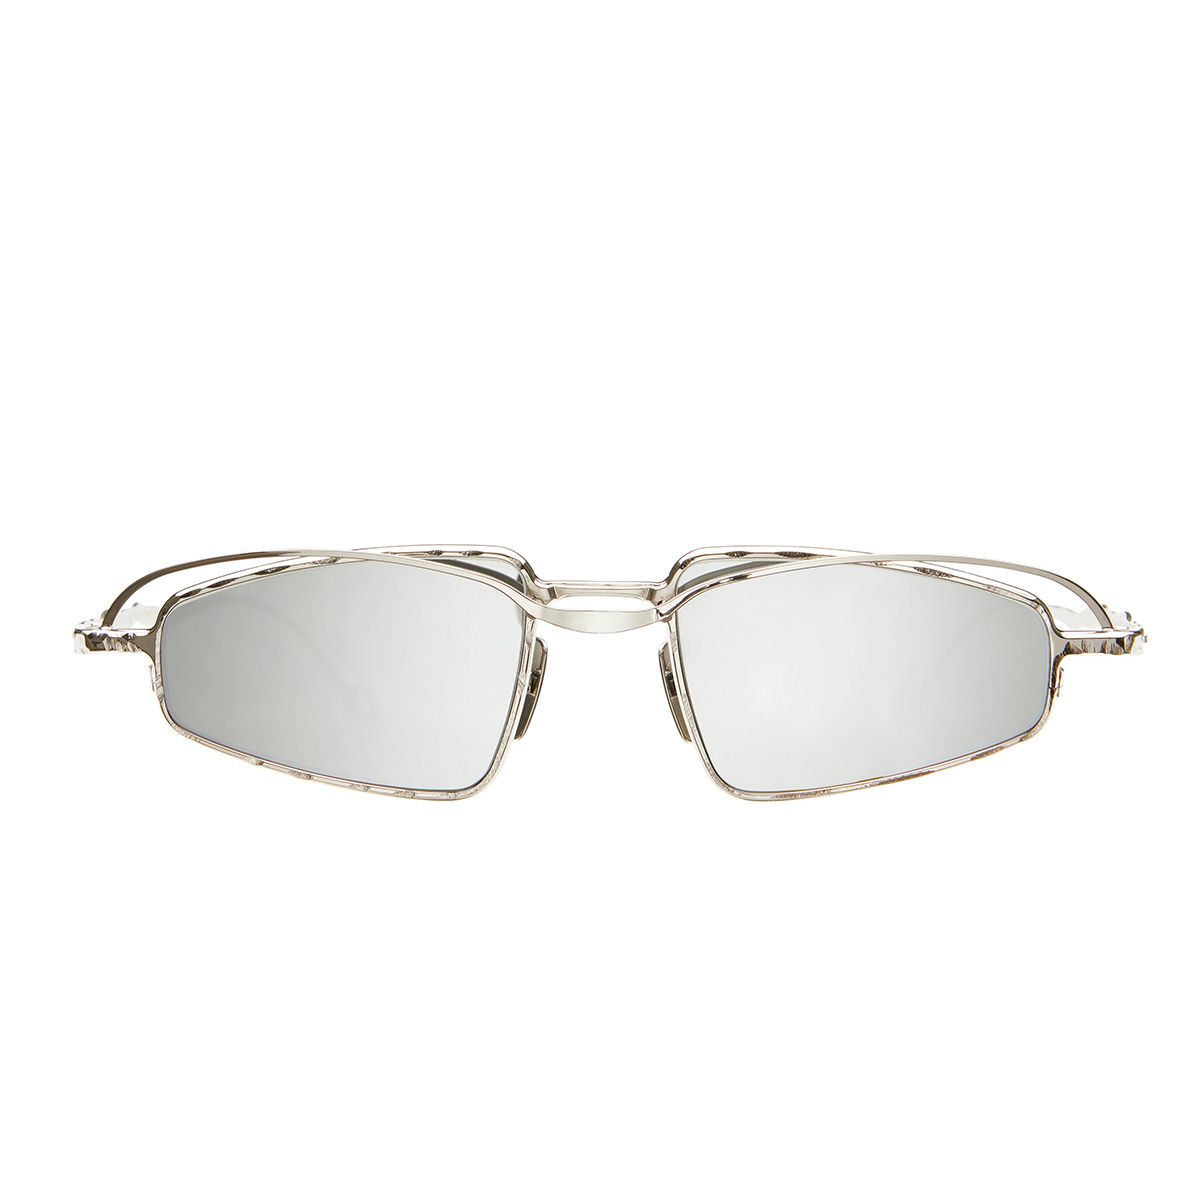 Oval Frames Sunglasses